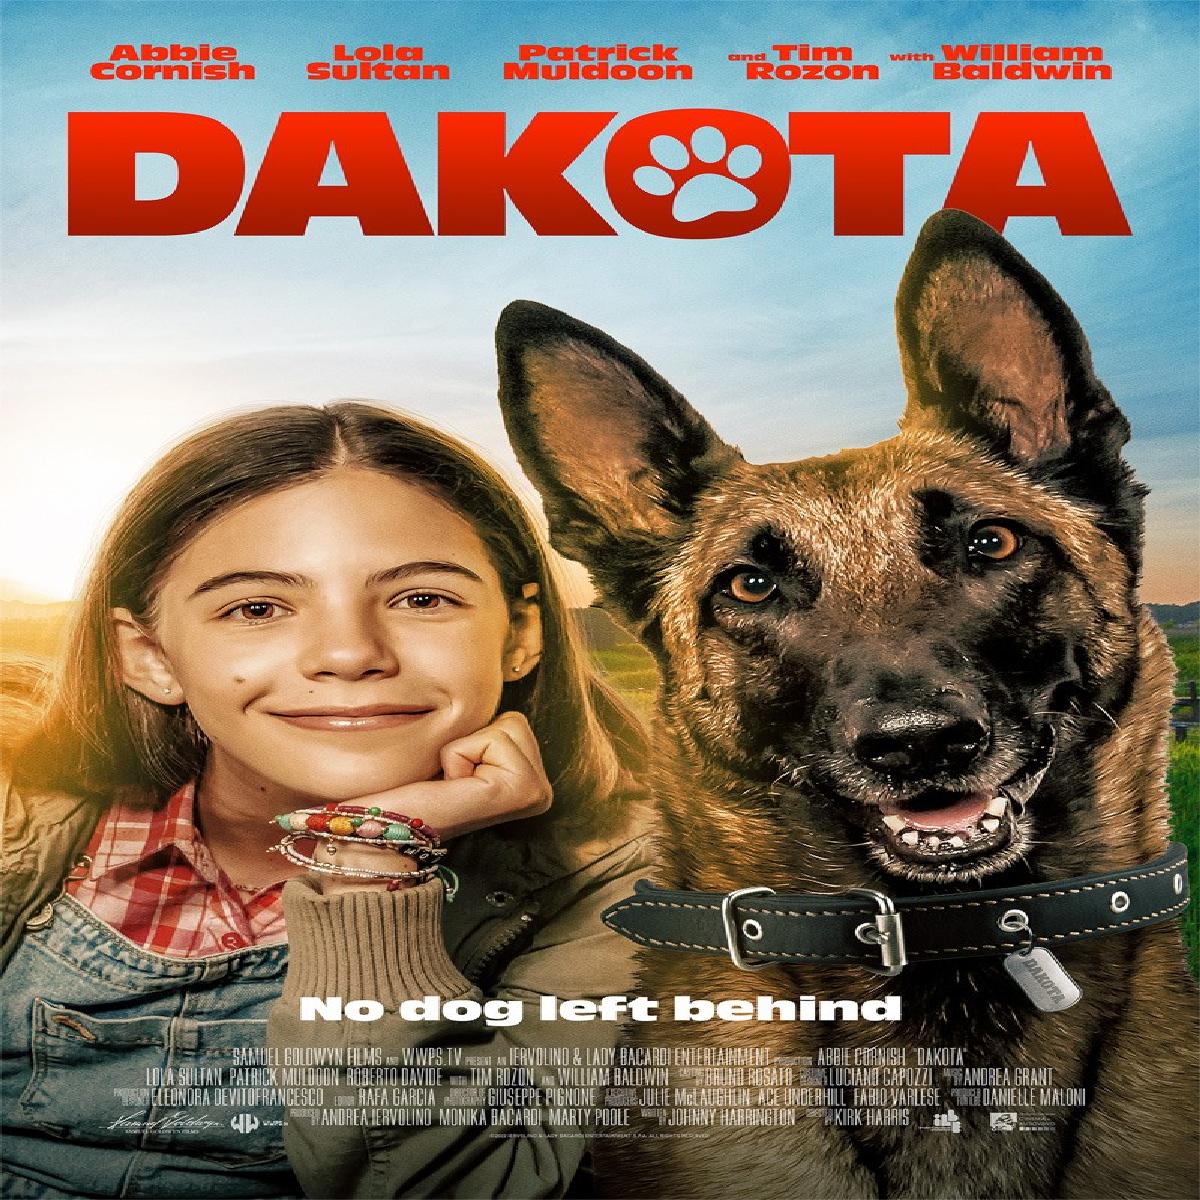 Dakota Trailer Is Here